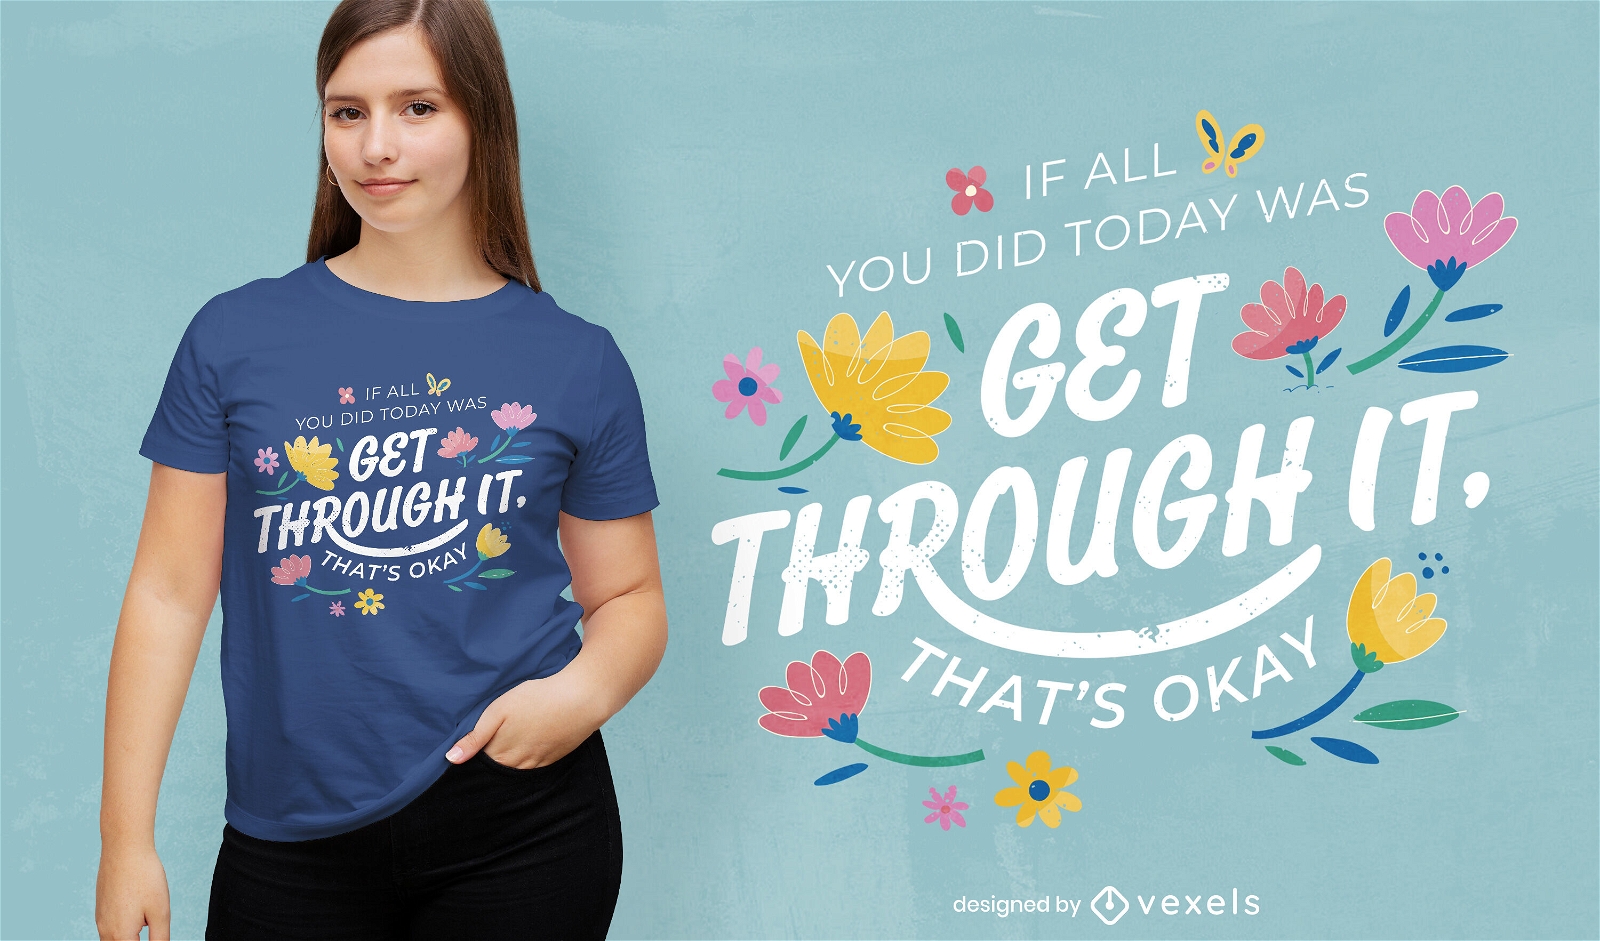 Motivierendes Zitat florales T-Shirt-Design